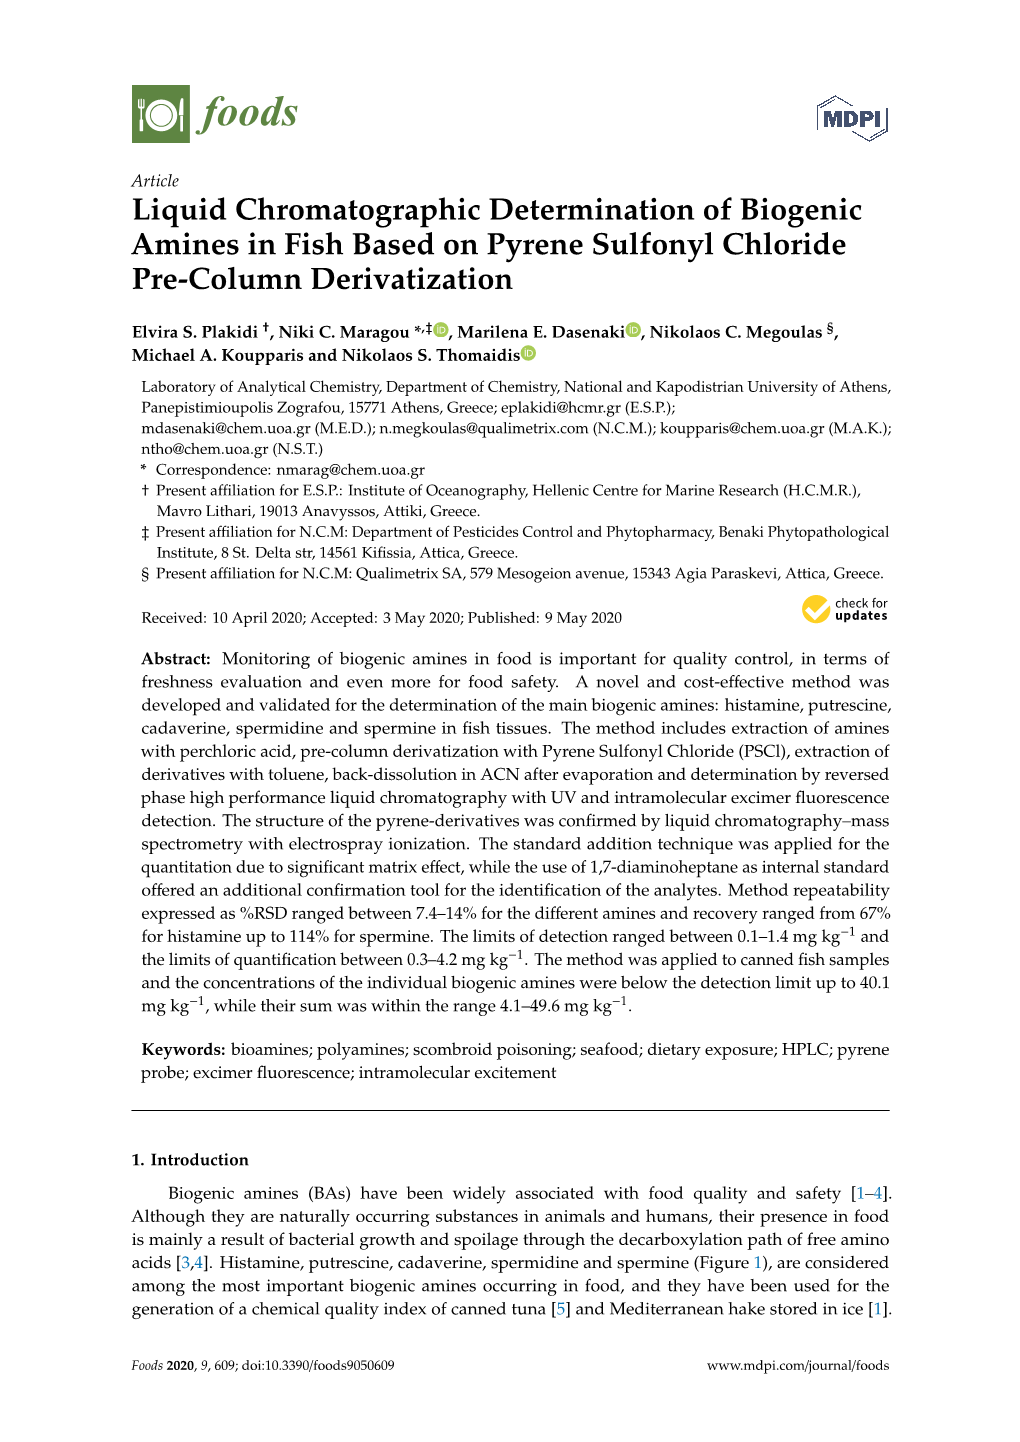 Liquid Chromatographic Determination of Biogenic Amines in Fish Based on Pyrene Sulfonyl Chloride Pre-Column Derivatization